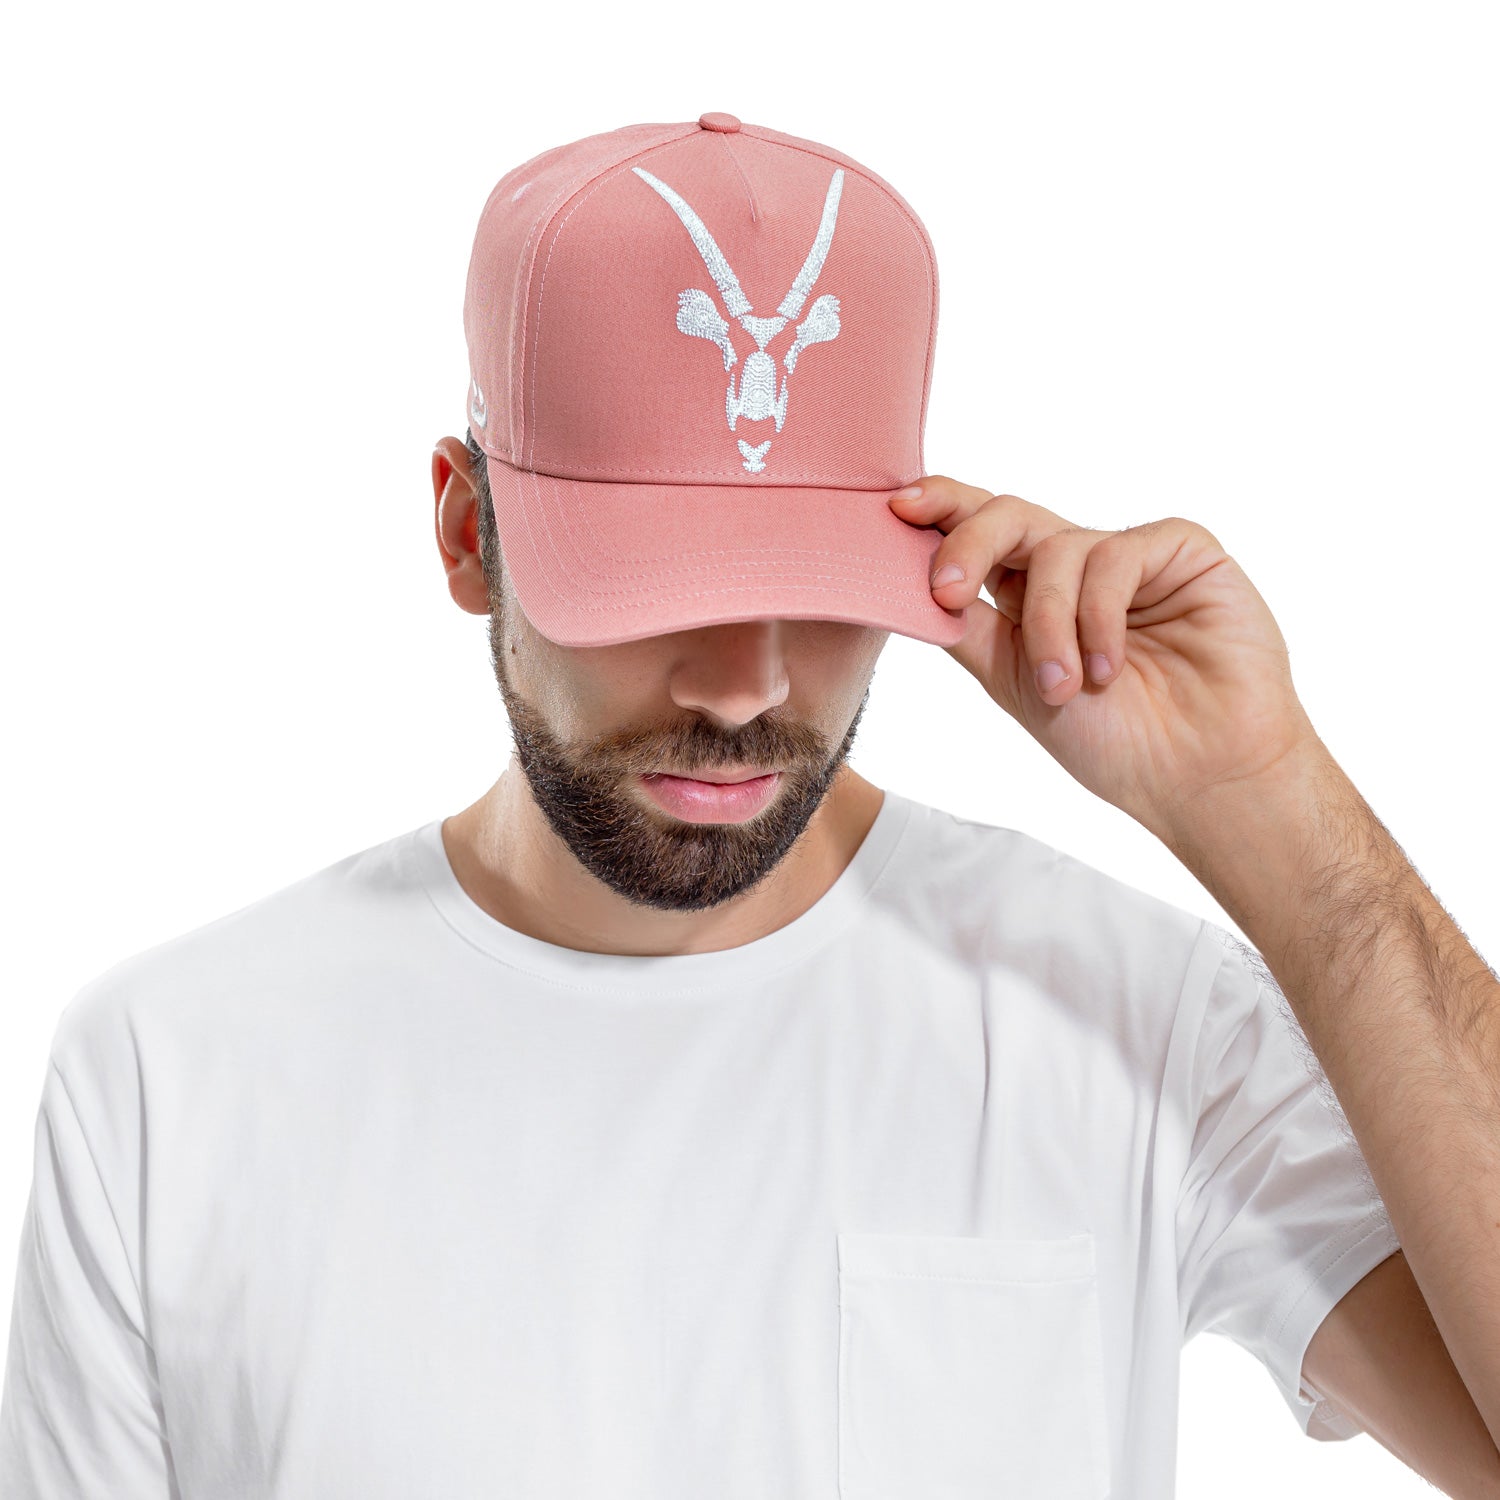 Pink Oryx baseball cap, Man, woman, alsadu, white embroidery, truck cap, unsex